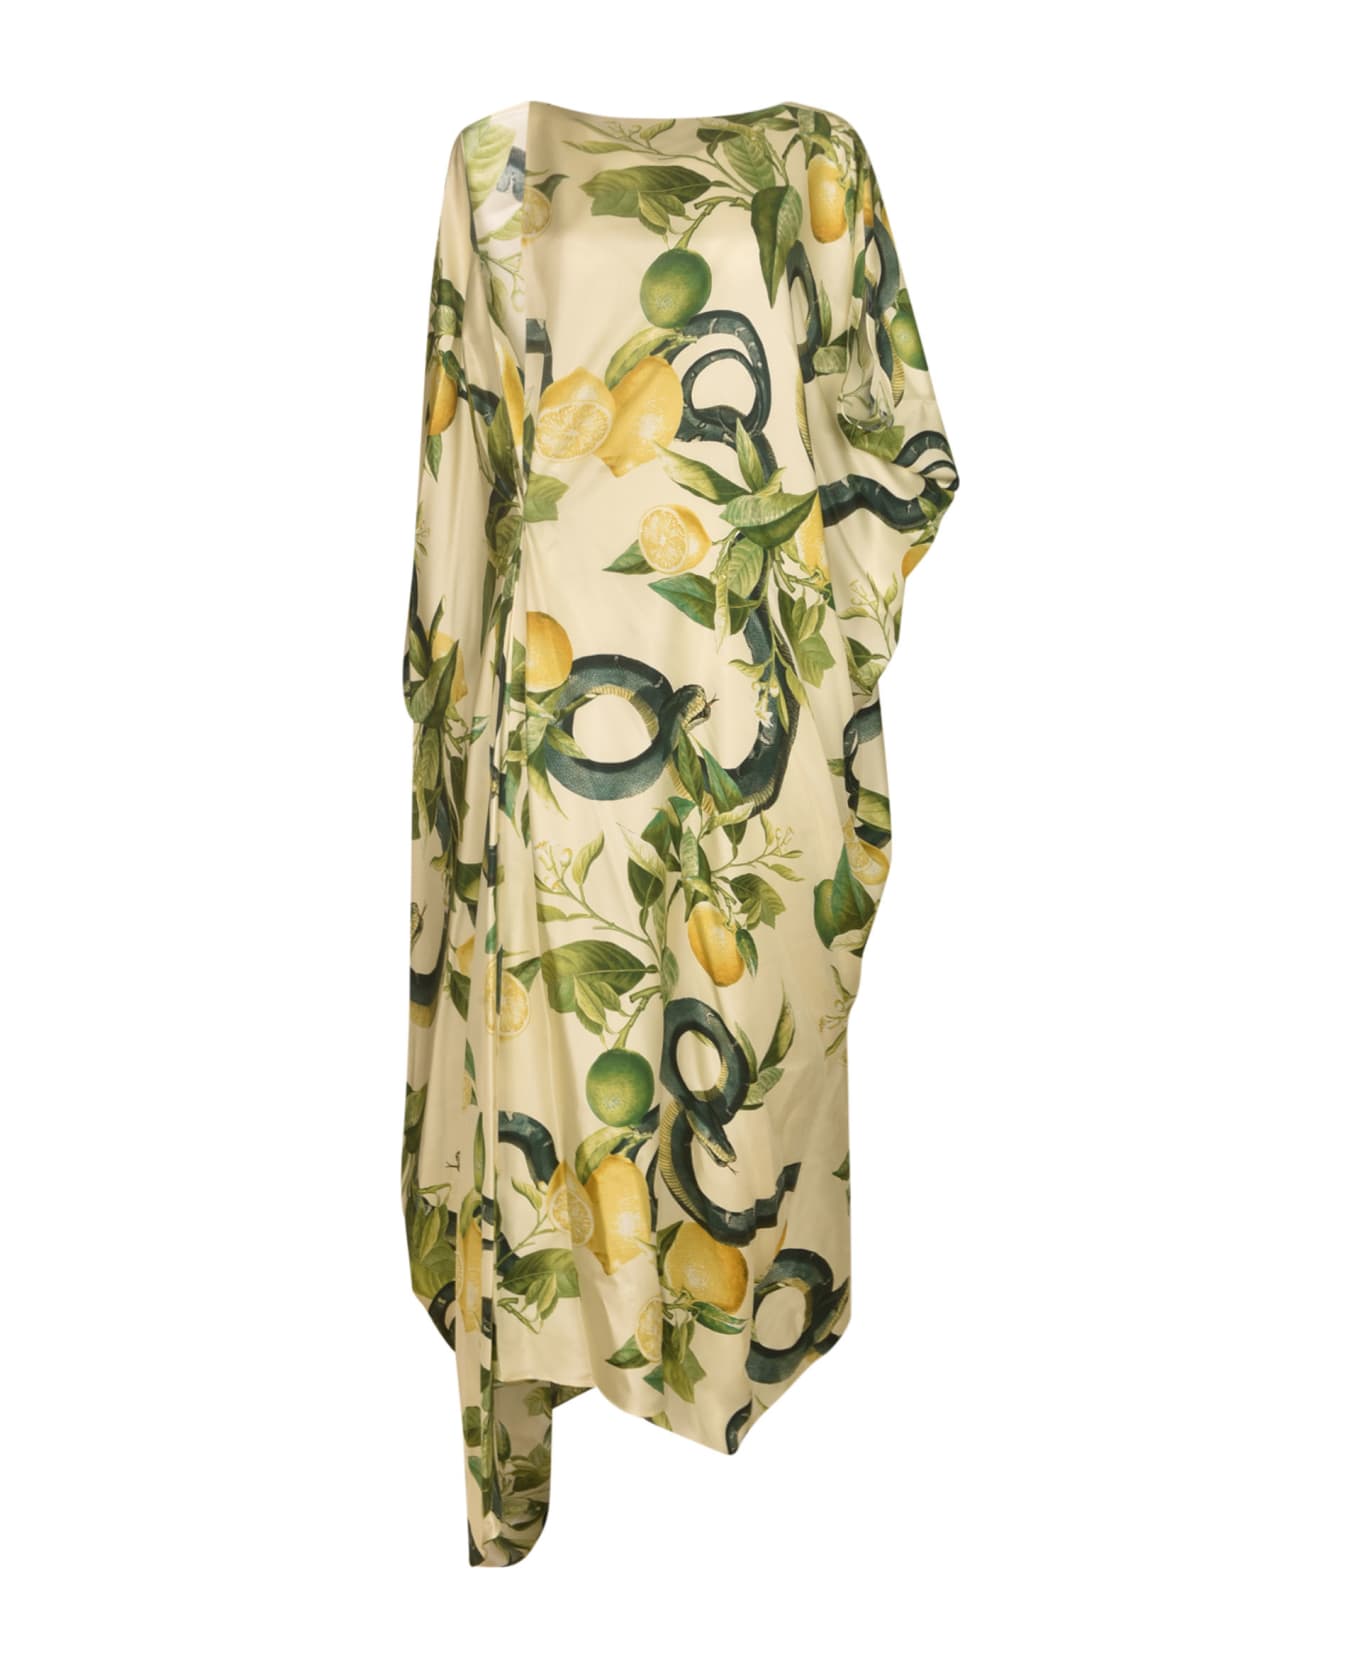 Roberto Cavalli Oversized Printed Dress - Ivory